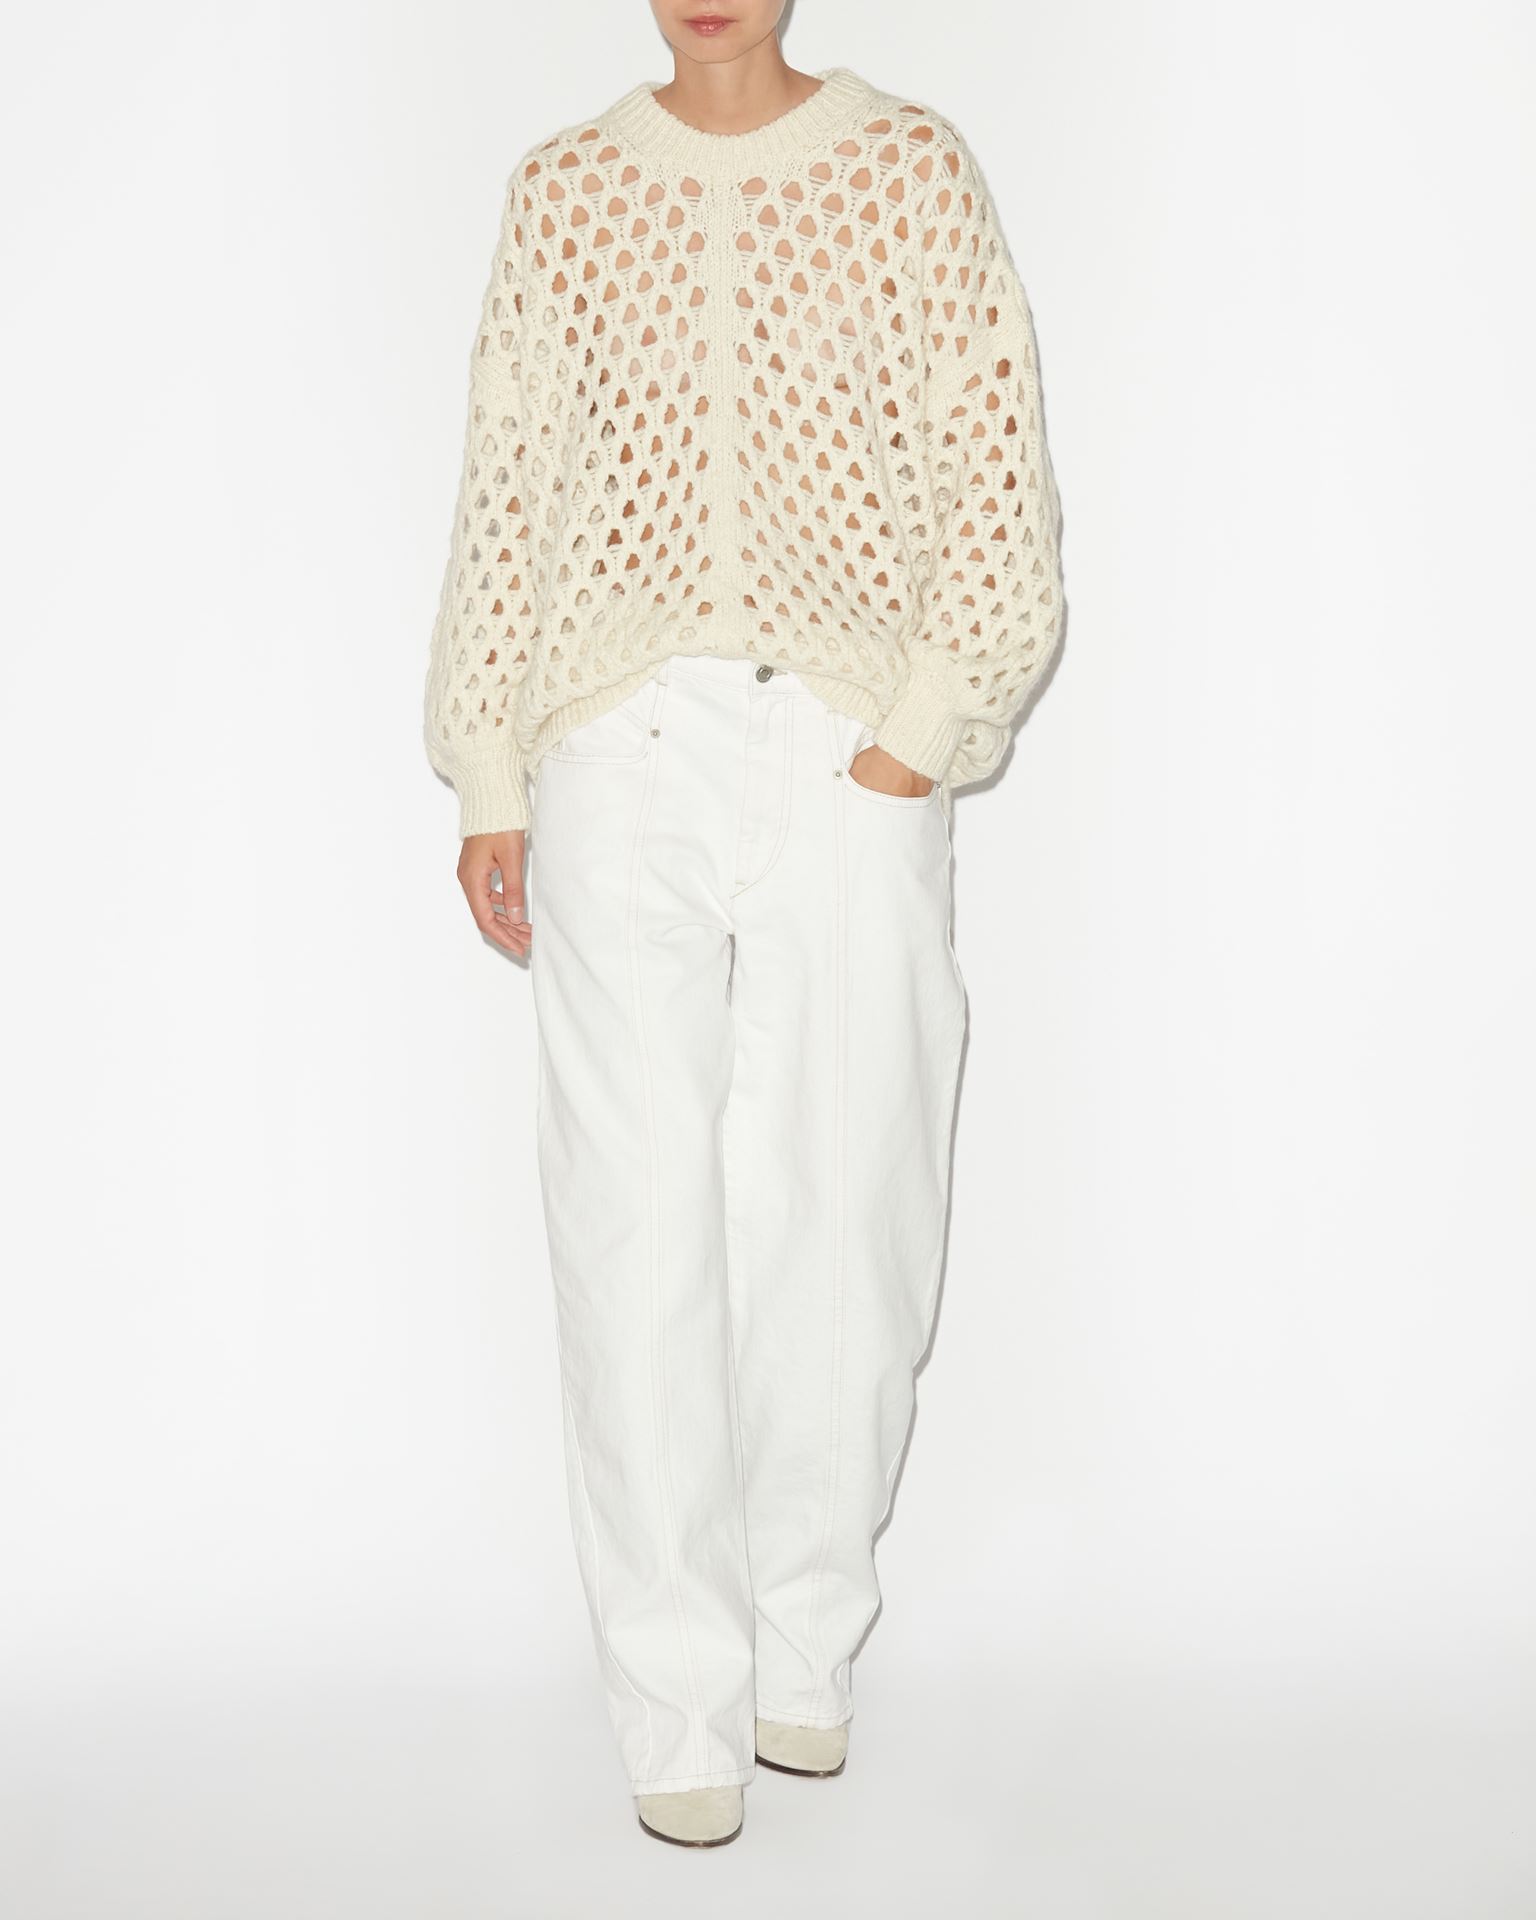 Isabel Marant, Tane Sweater - Women - White